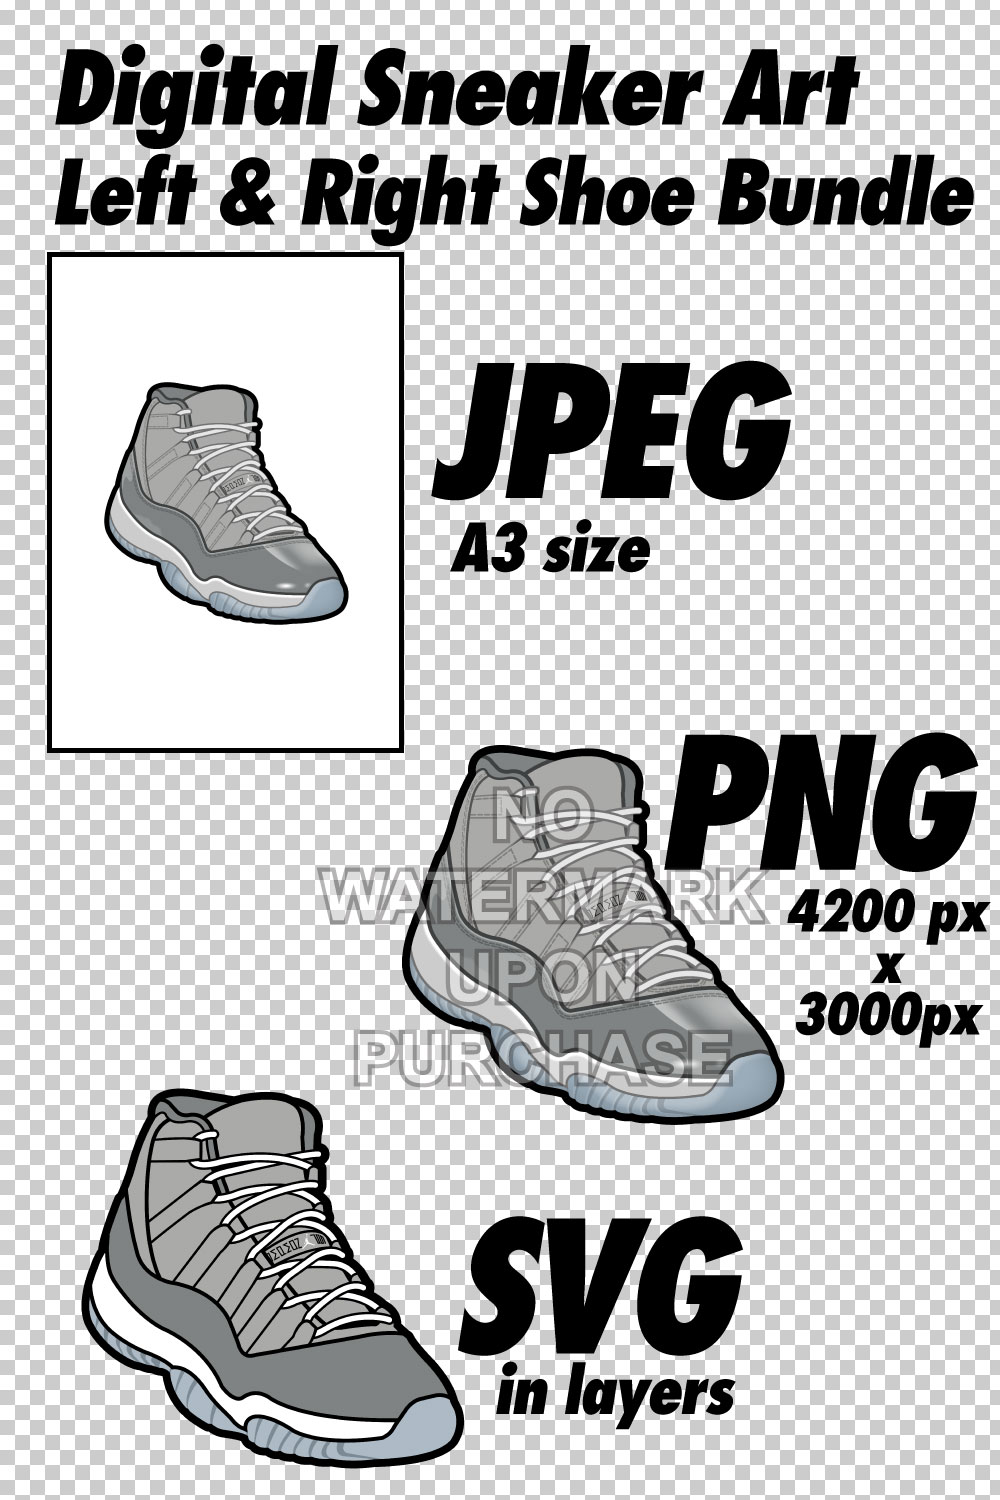 Air Jordan 11 Cool Grey JPEG PNG SVG right & left shoe bundle pinterest preview image.